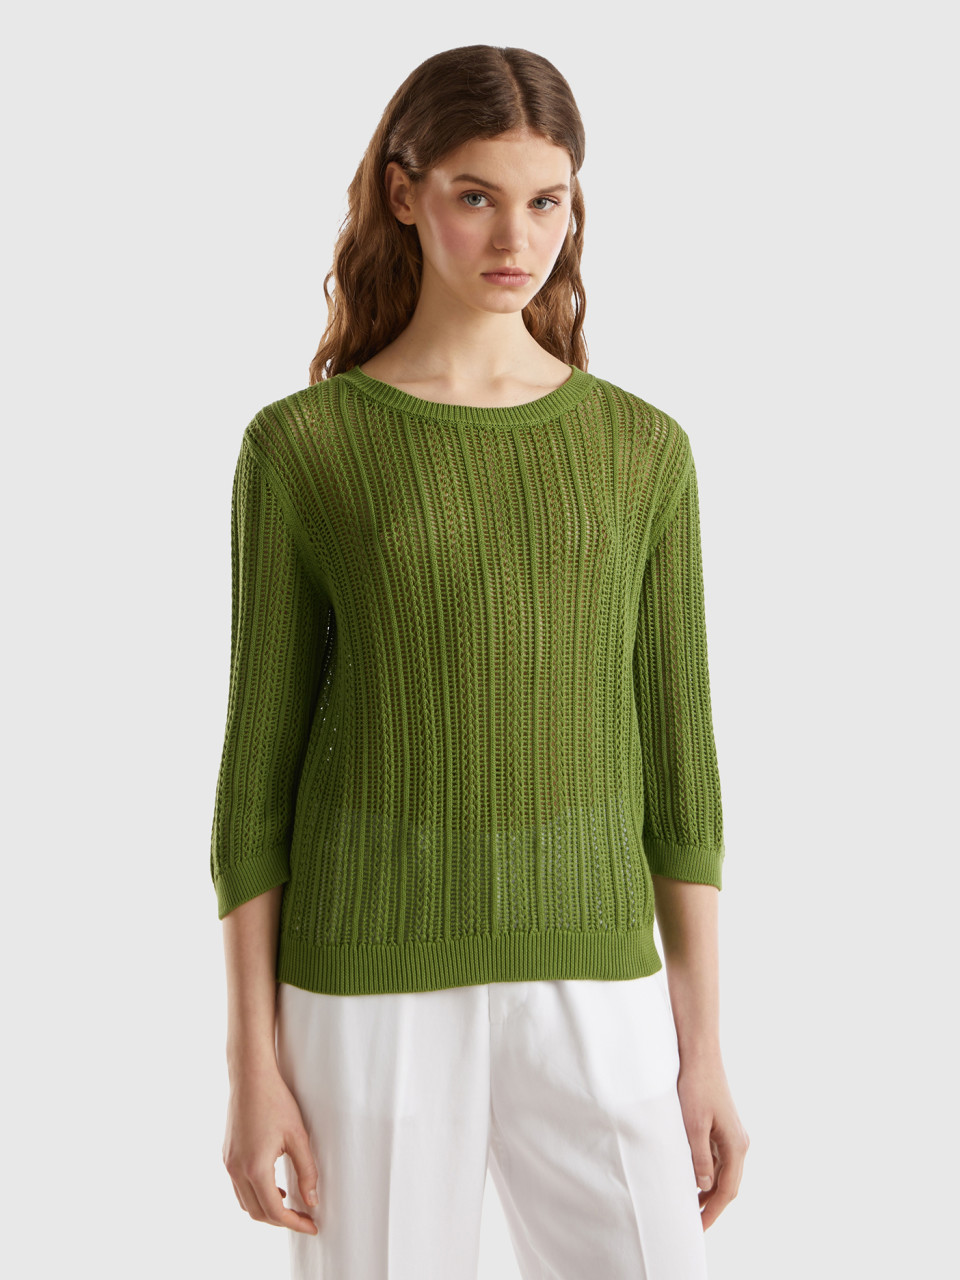 Benetton, Crochet Sweater, Military Green, Women